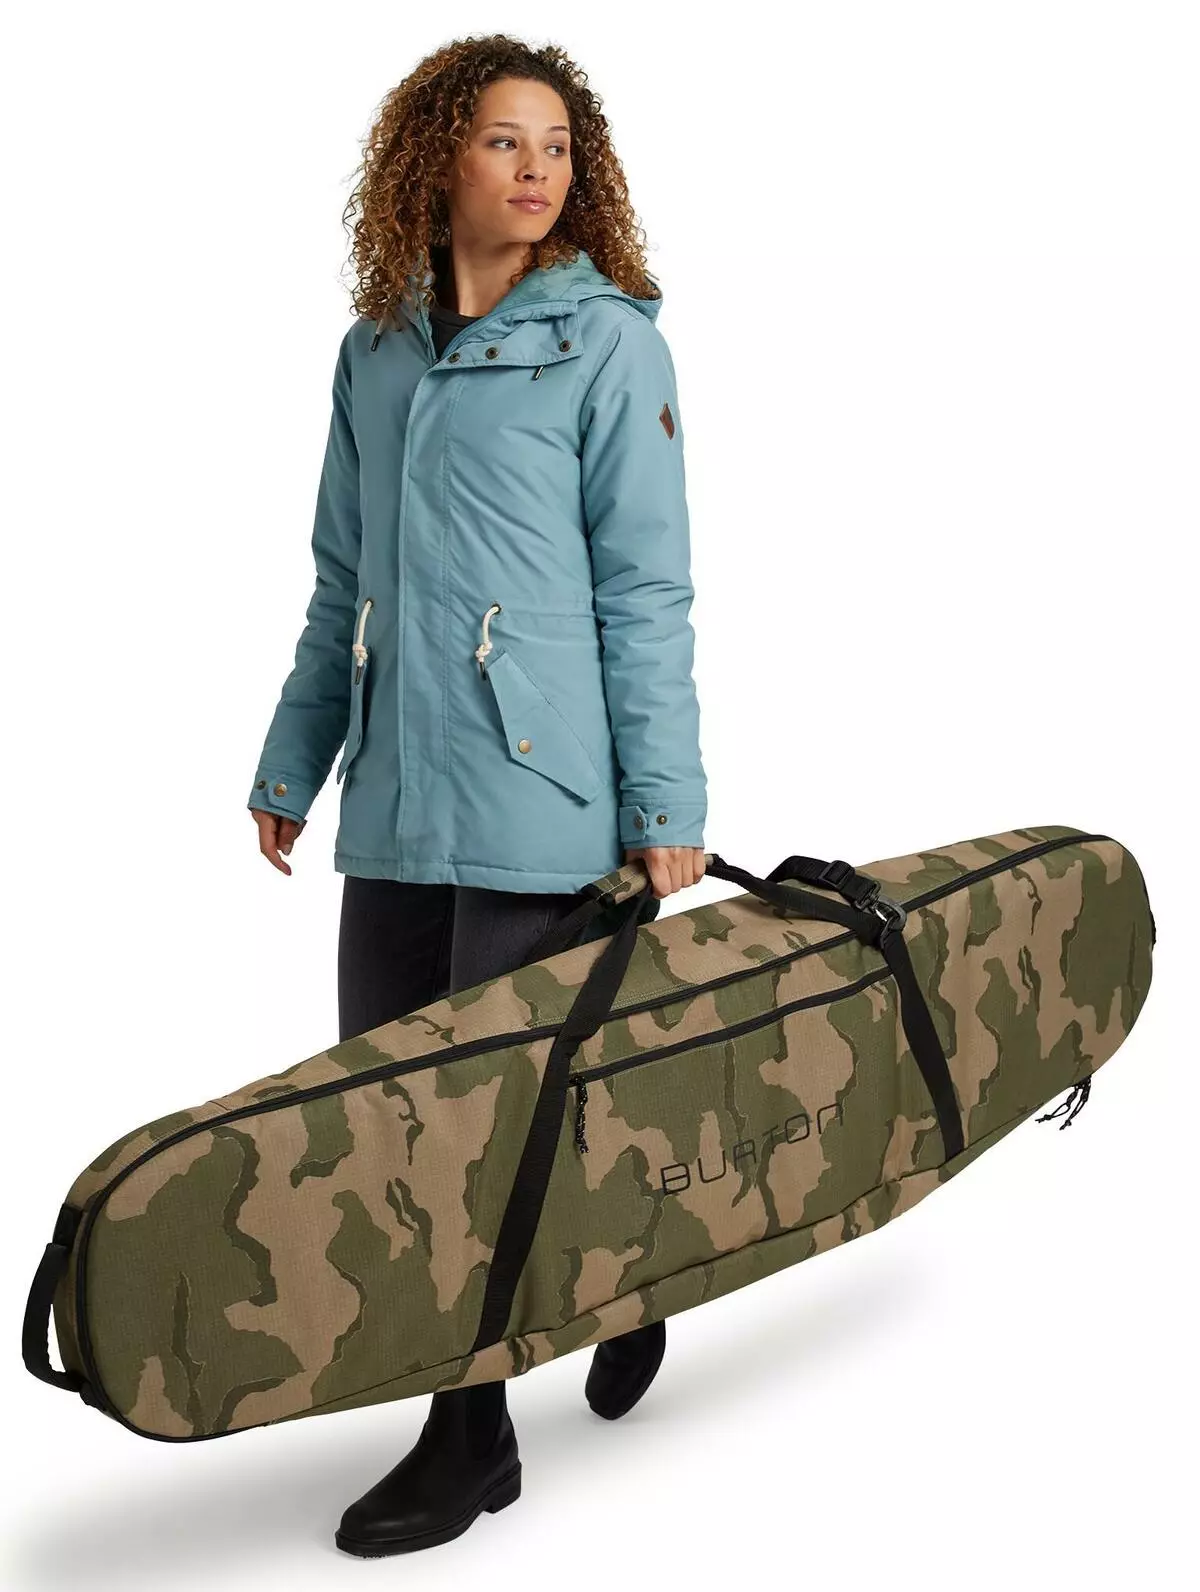 Snowboard ກວມເອົາ: On Wheel ແລະ Covers Bas, Backpacks-Covers. ວິທີການເລືອກພວກມັນສໍາຫຼັບຖົງຕີນຫິມະ? ຜ້າຄຸມ snowboard neoprene ແລະແບບອື່ນໆ 20278_5